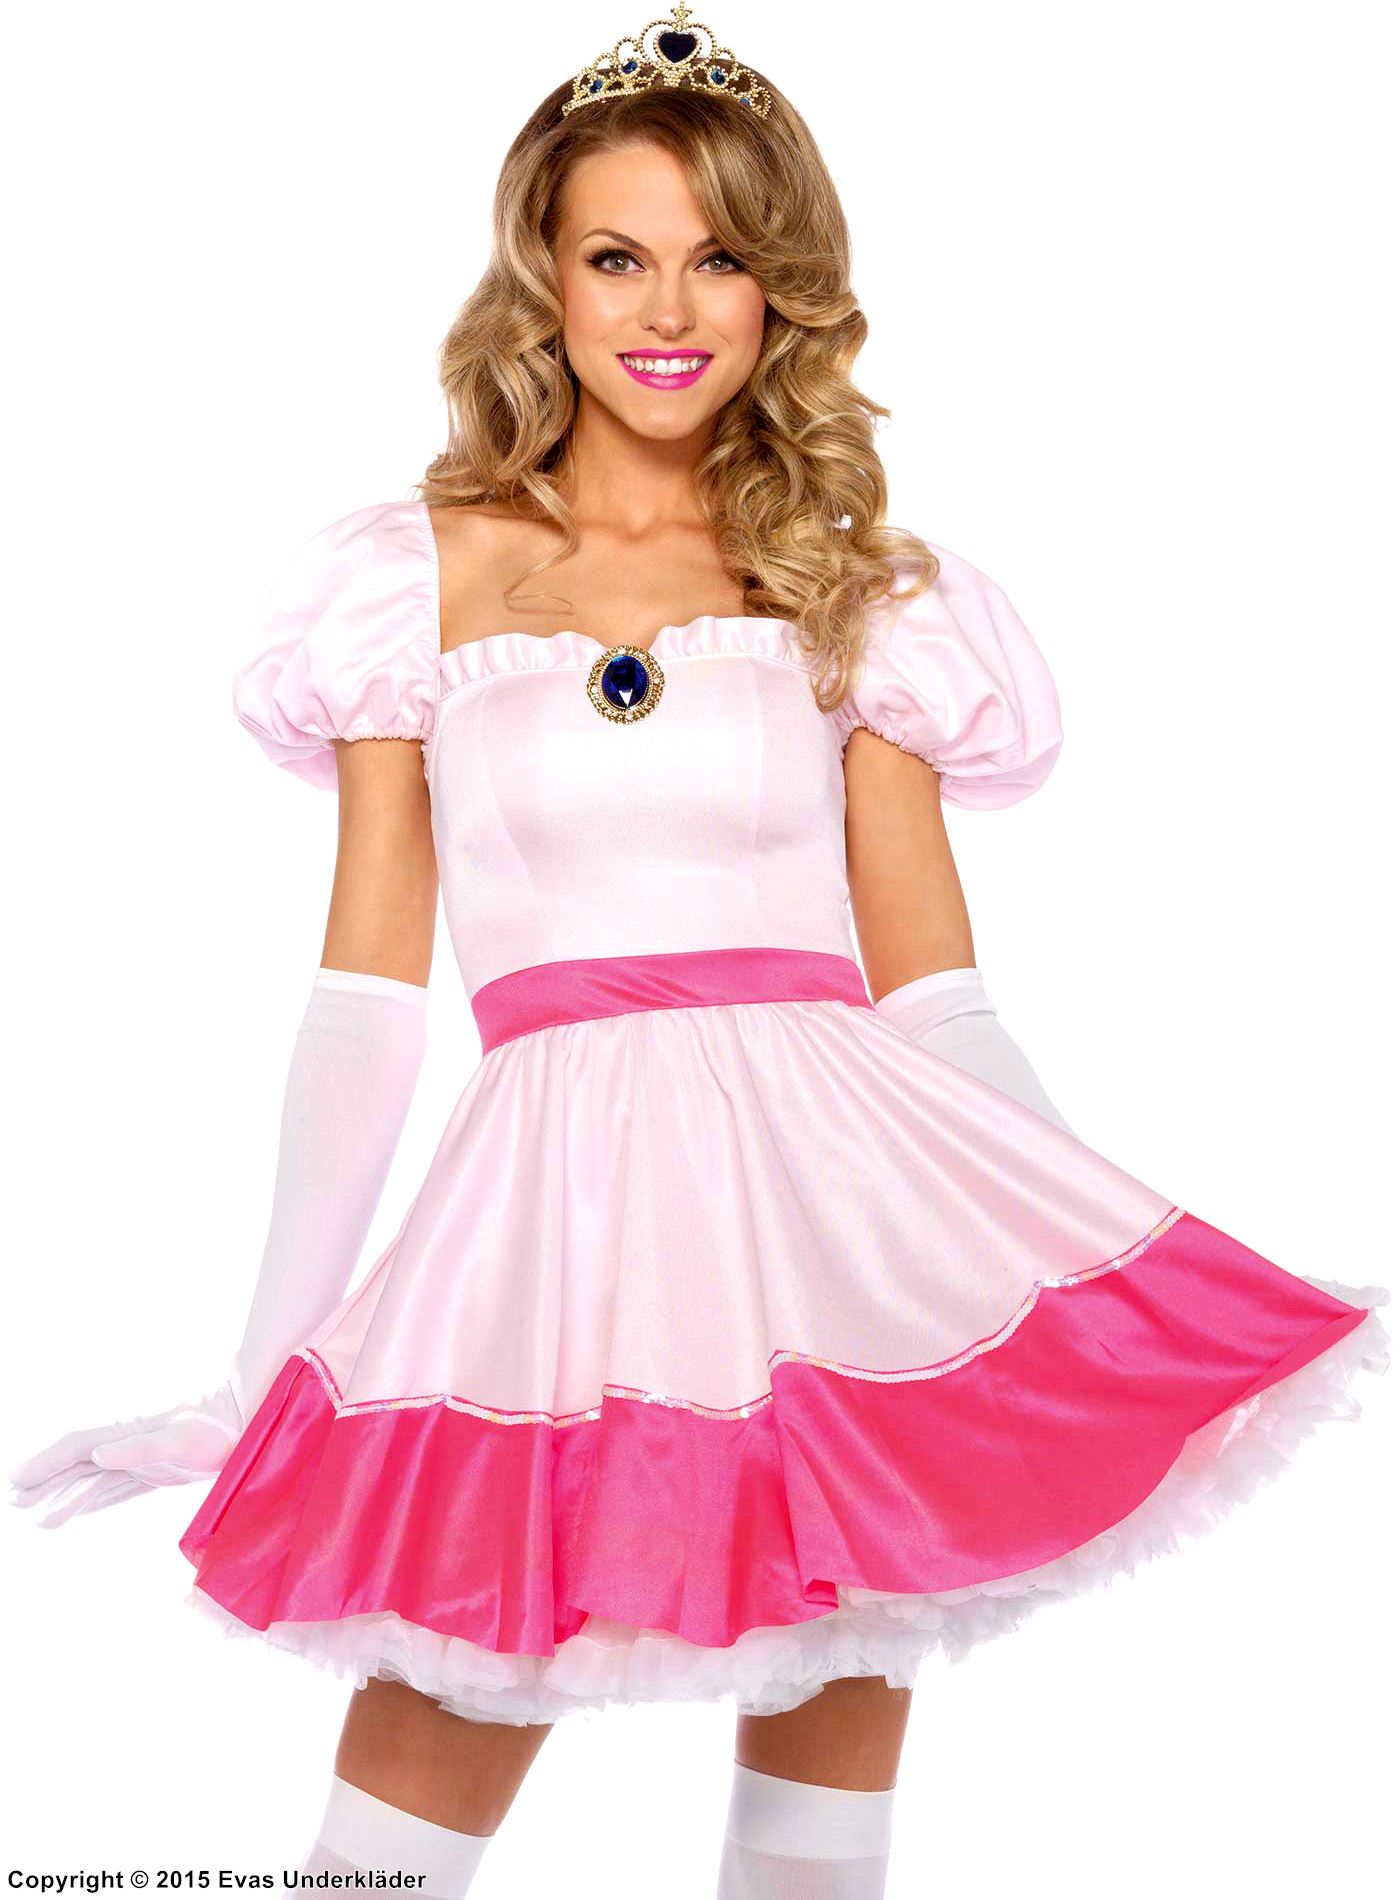 Princess Peach from Super Mario, costume dress, rhinestones, puff sleeves